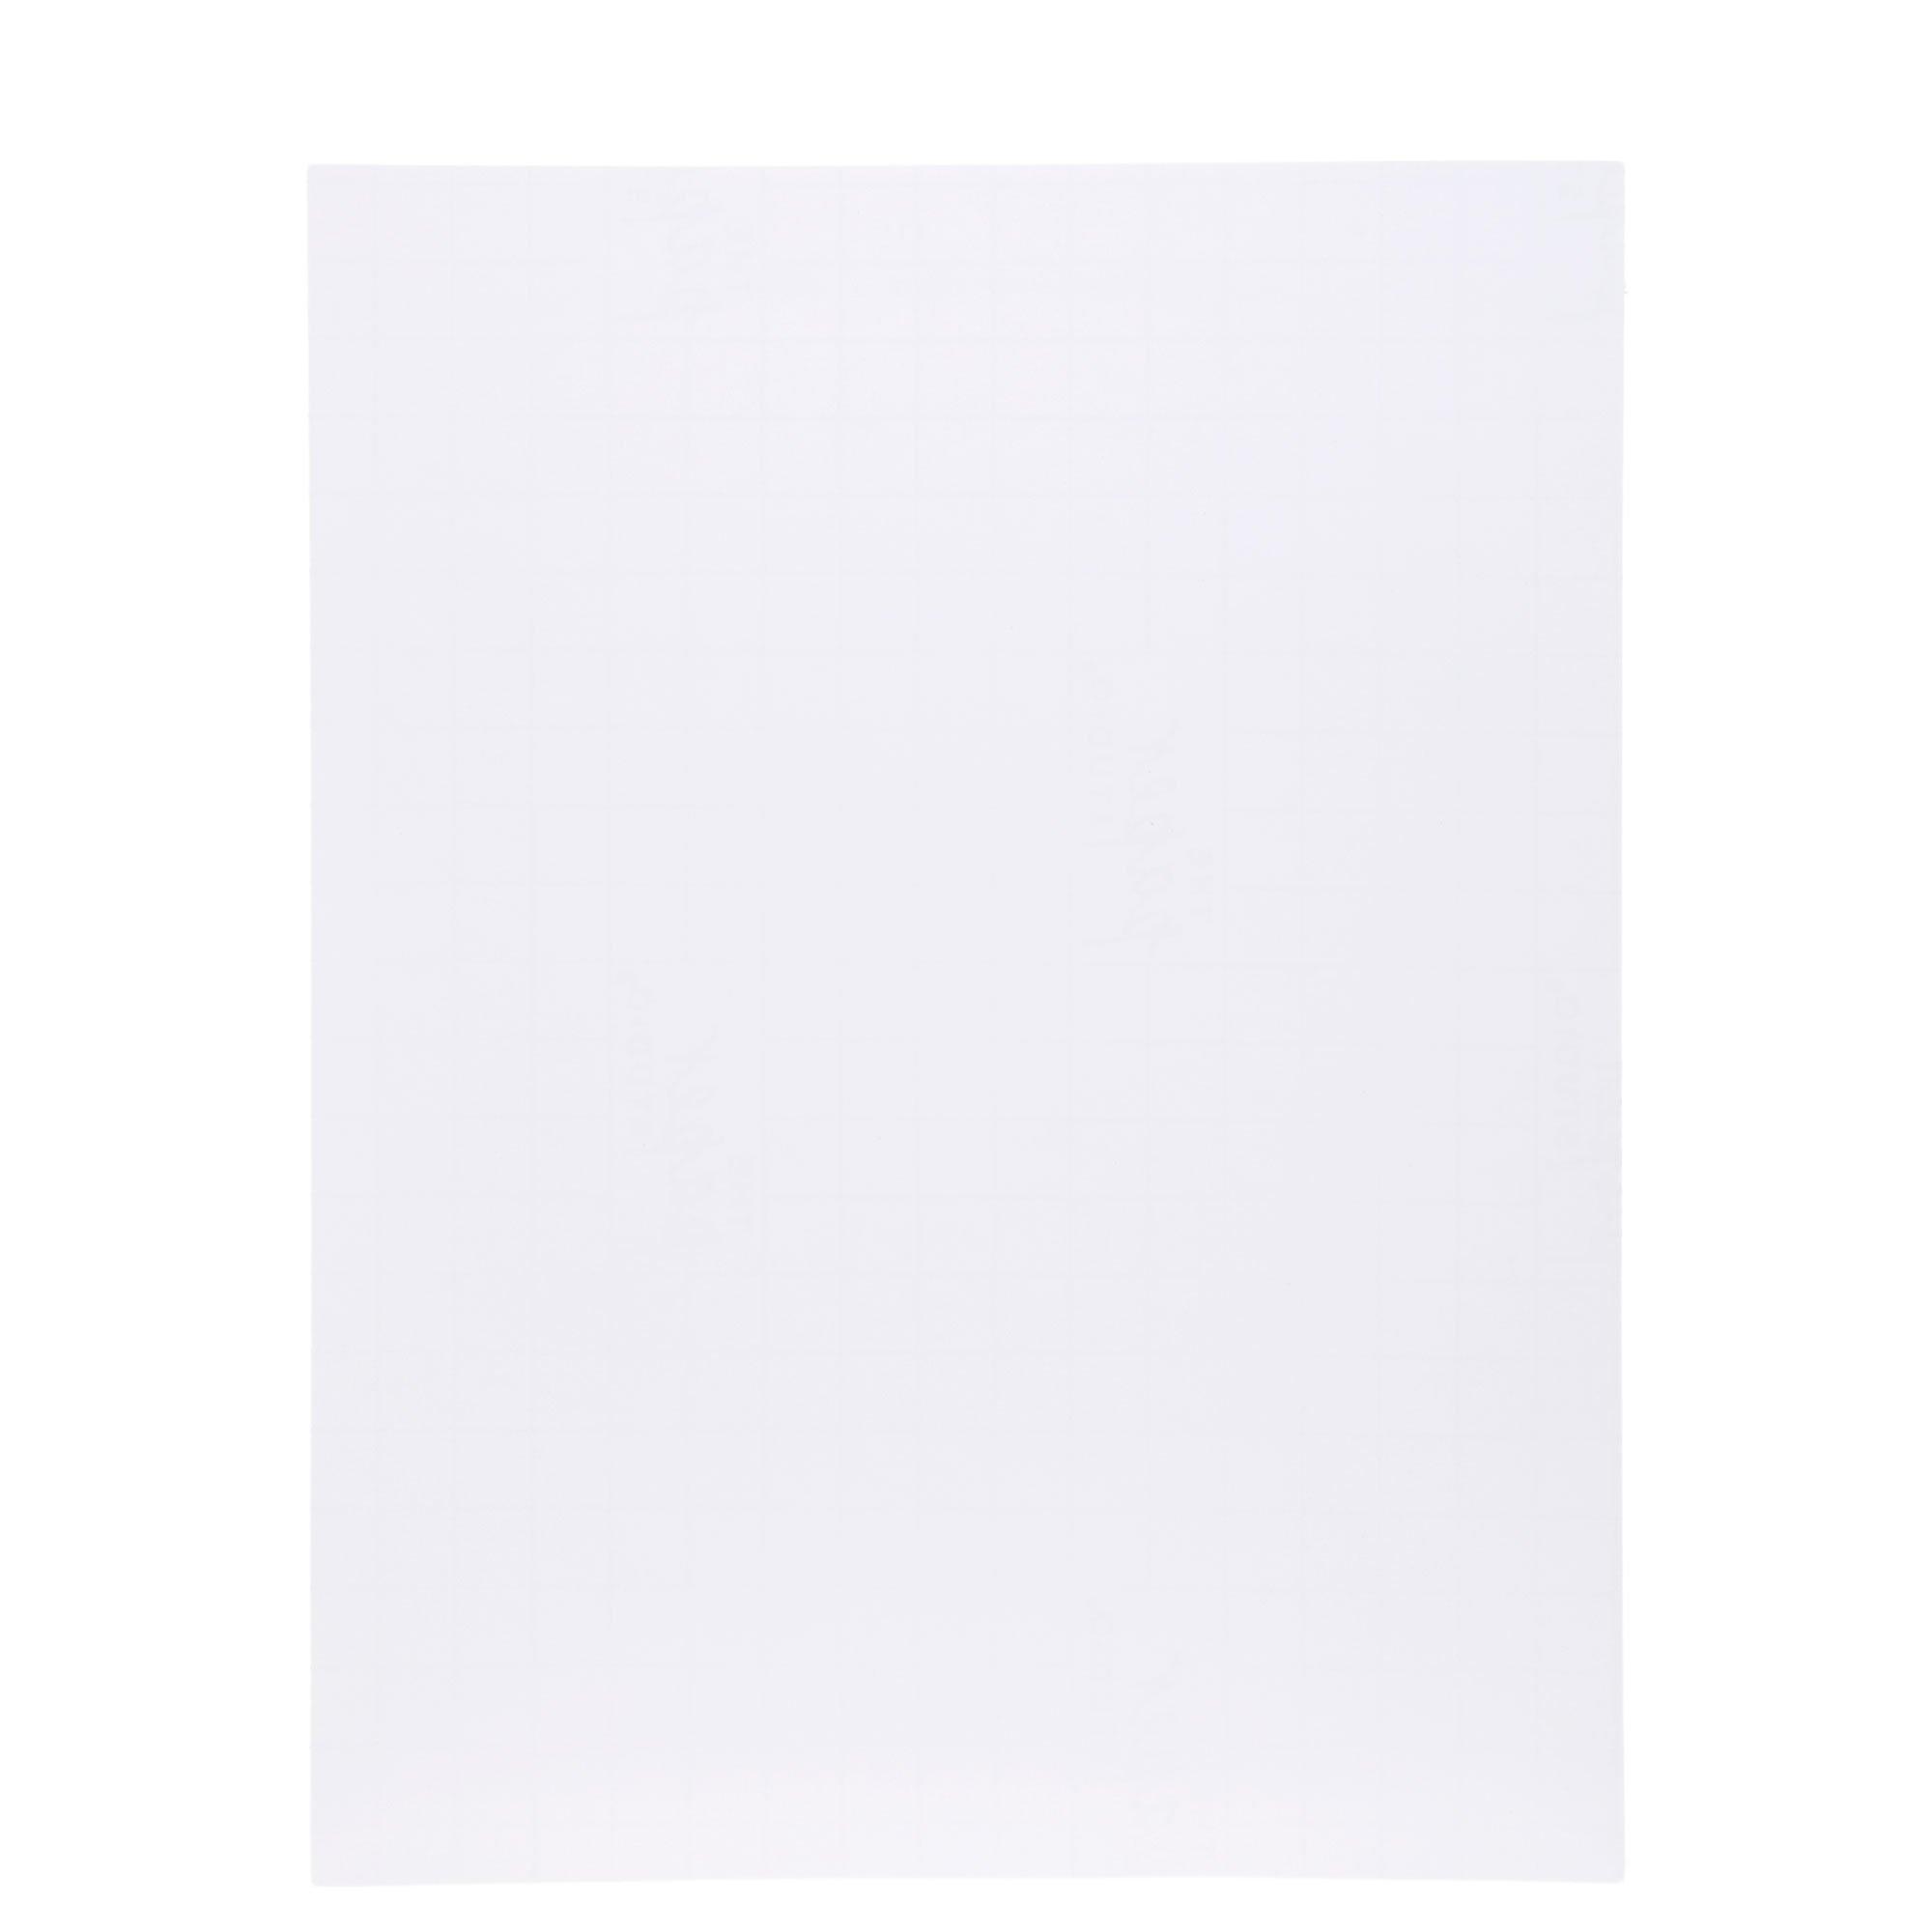 Self sticking sheets white blank matte paper 8.5 x 11